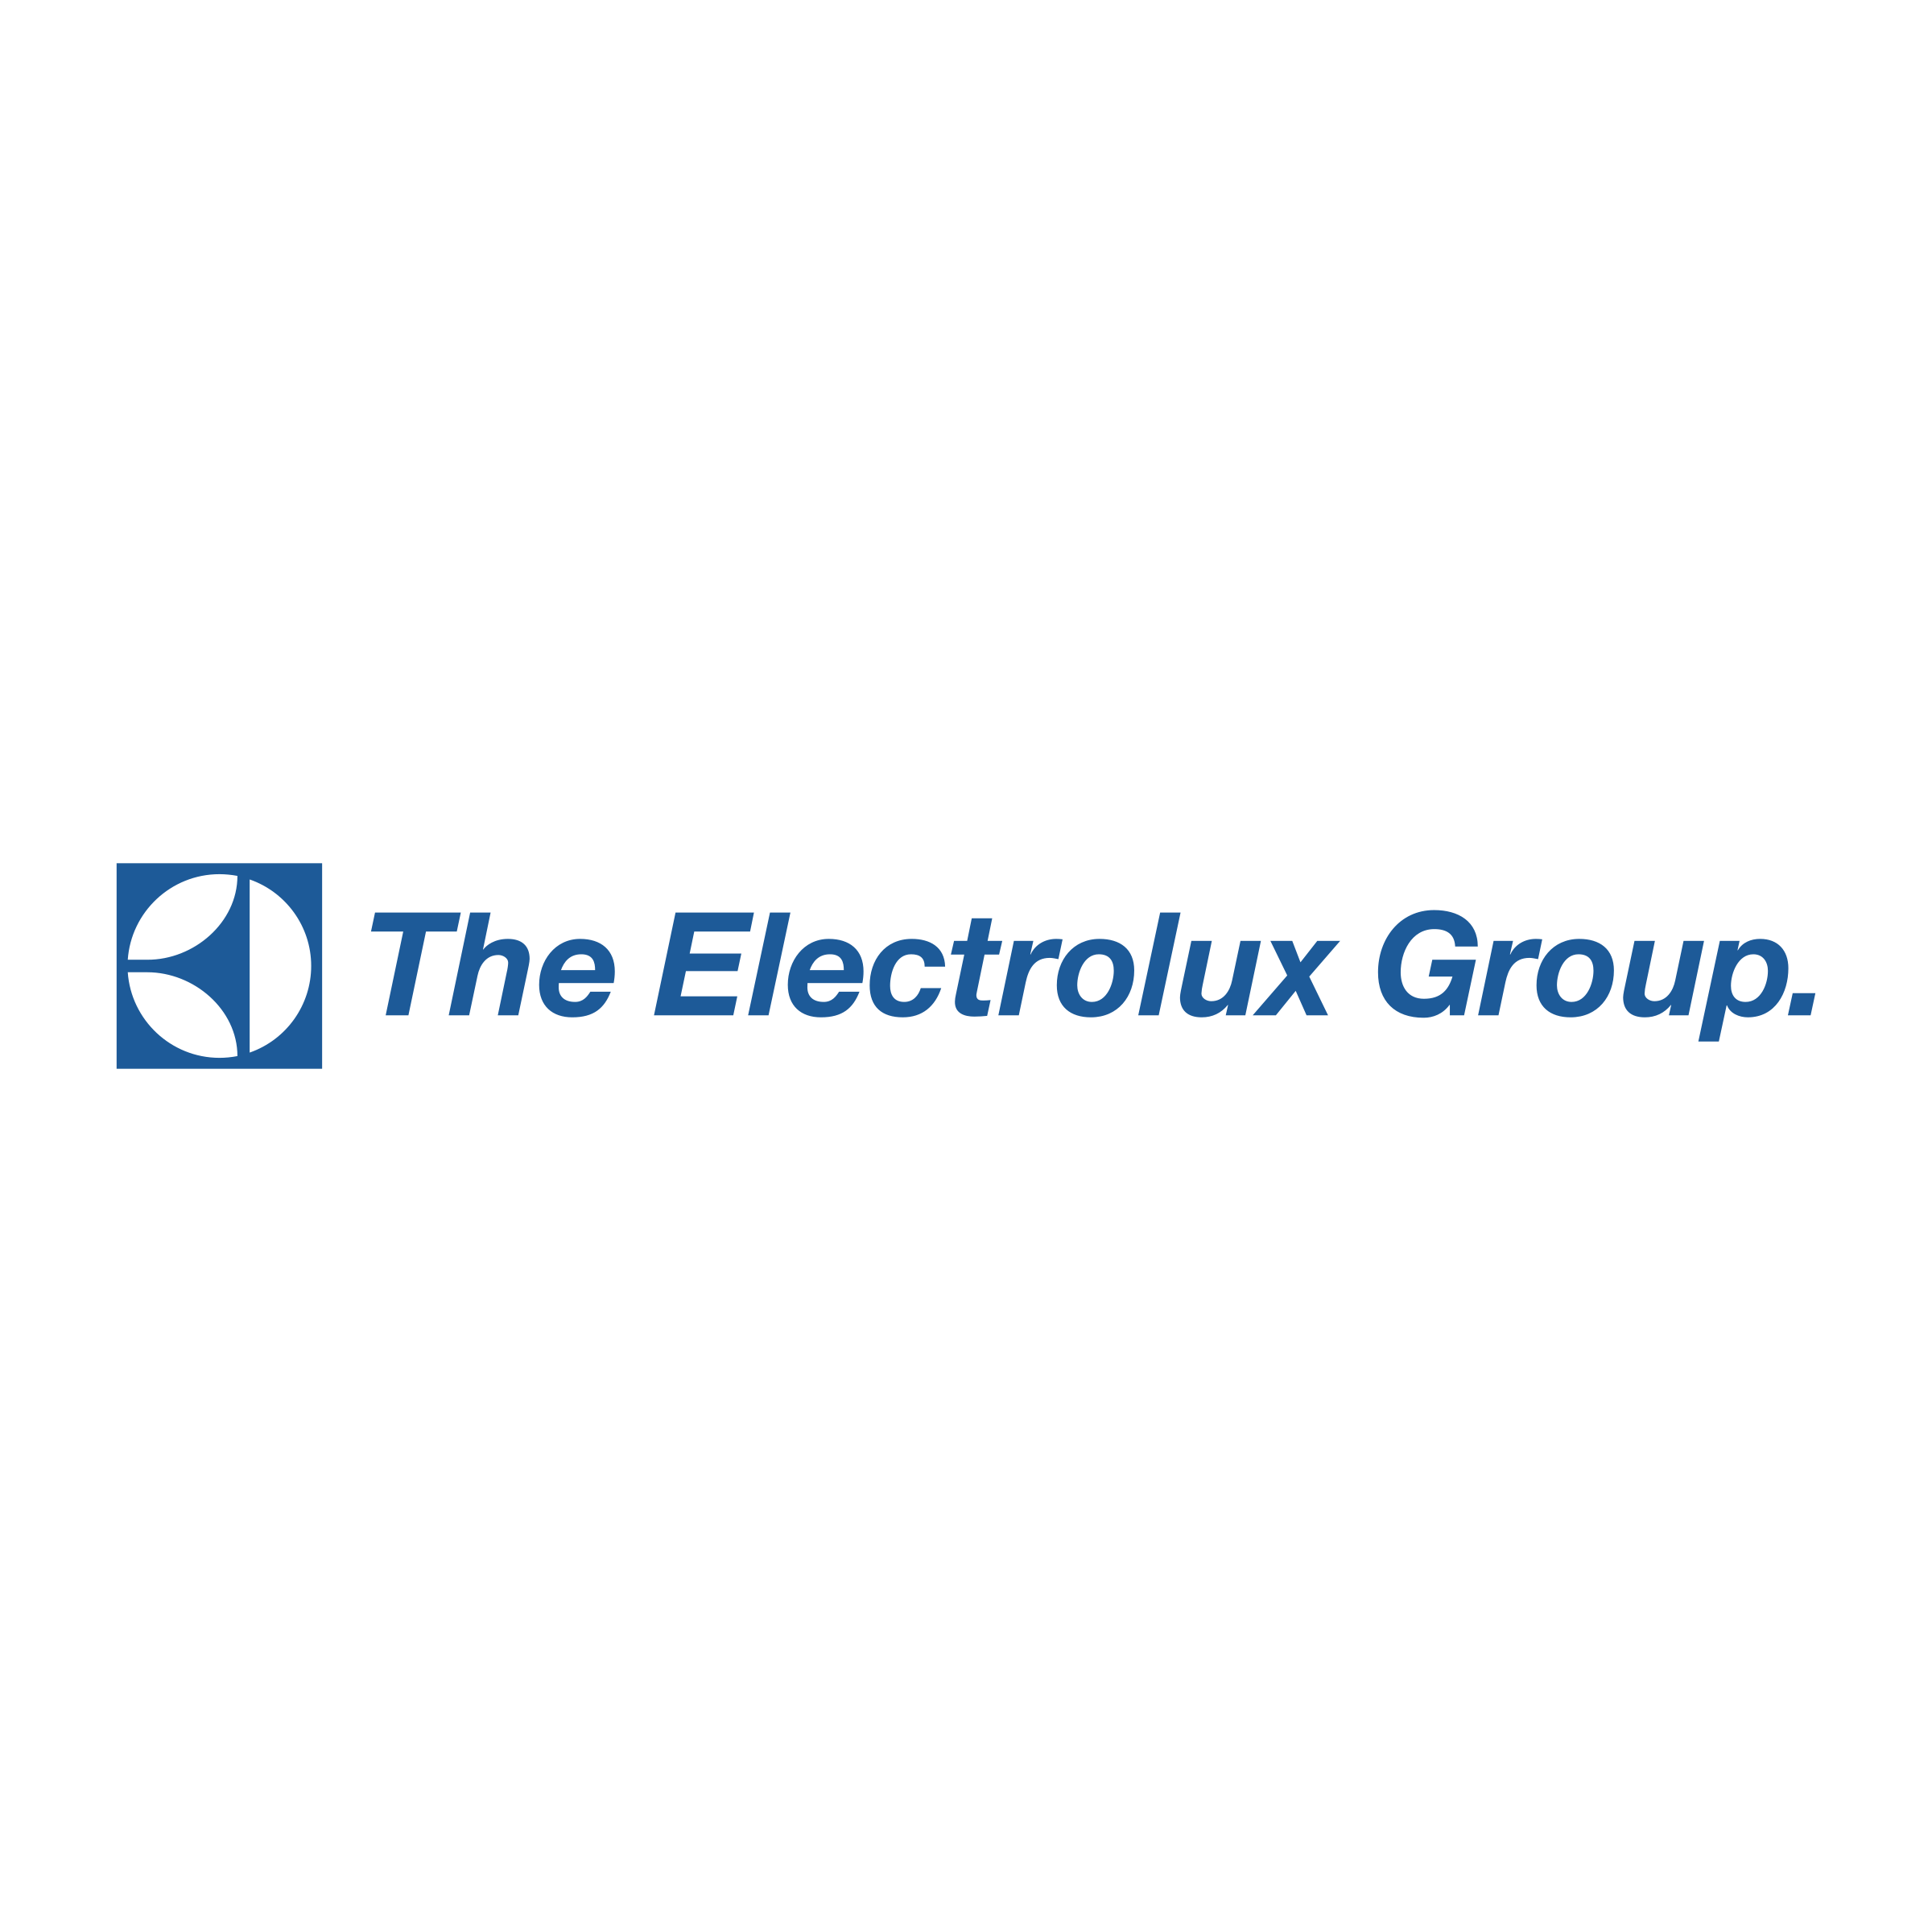 The Electrolux Group Logo Png Transparent & Svg Vector   Freebie Pluspng.com  - Electrolux, Transparent background PNG HD thumbnail